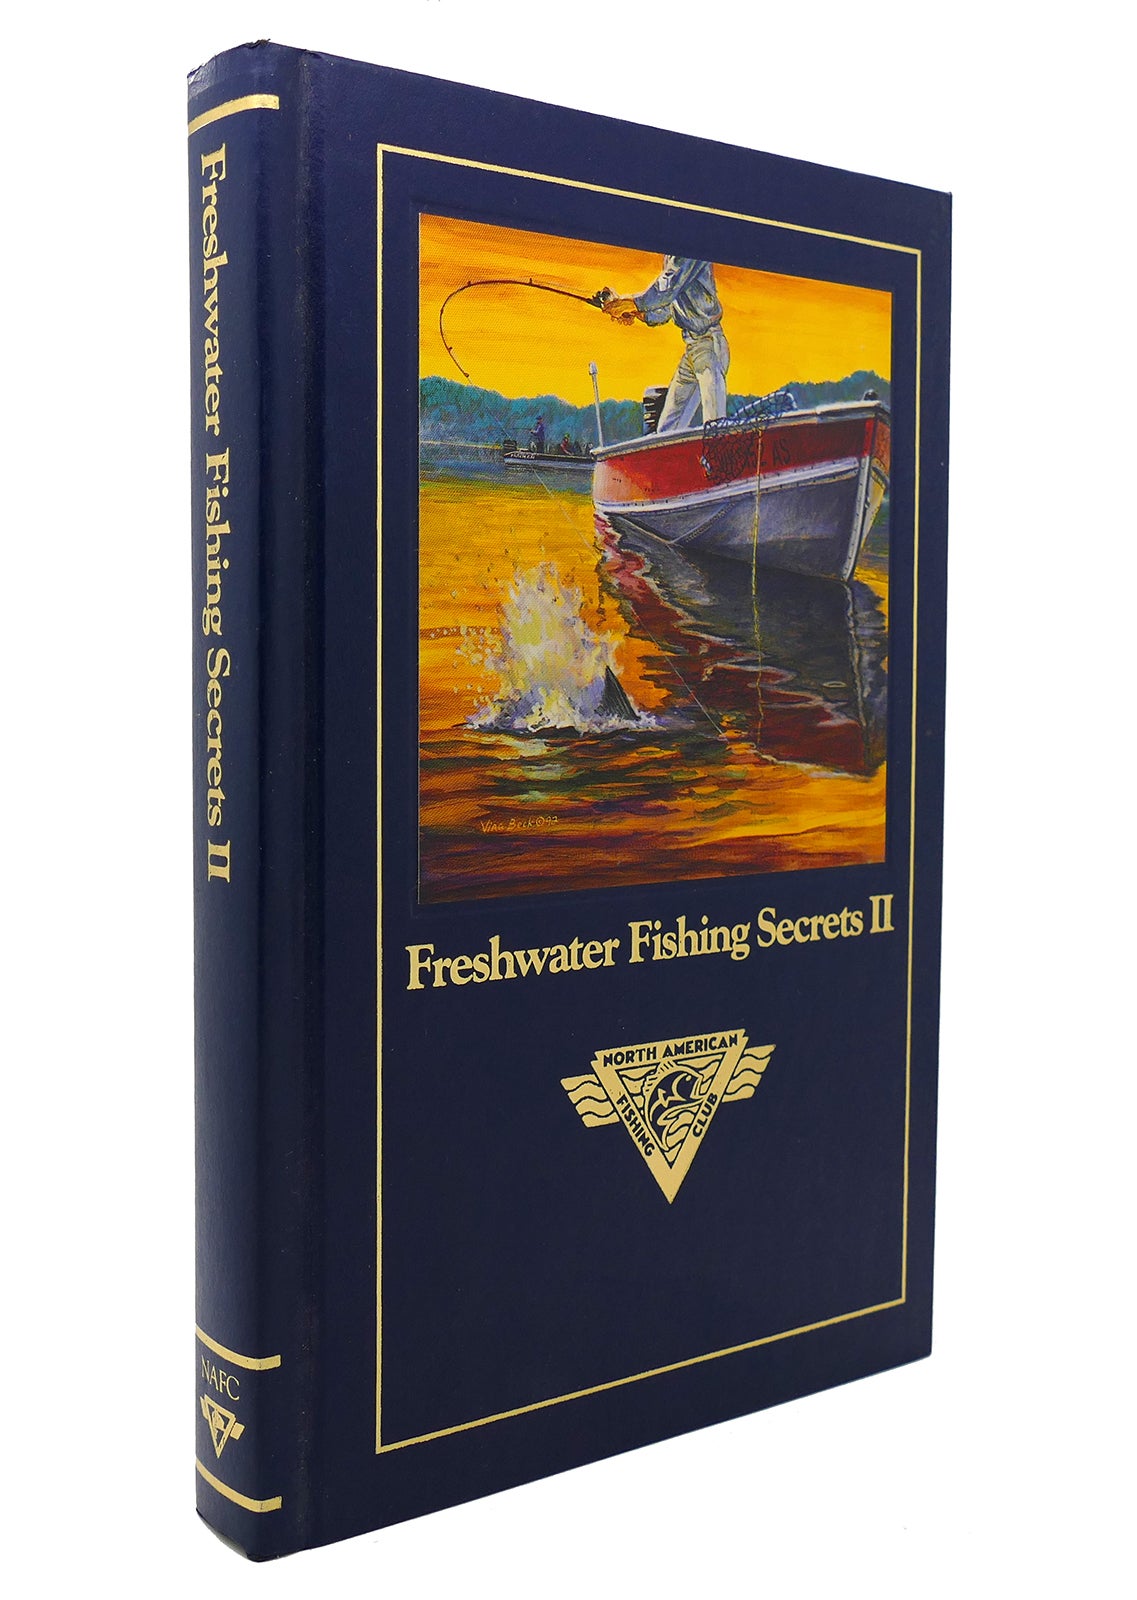 FRESHWATER FISHING SECRETS II Complete Angler's Library